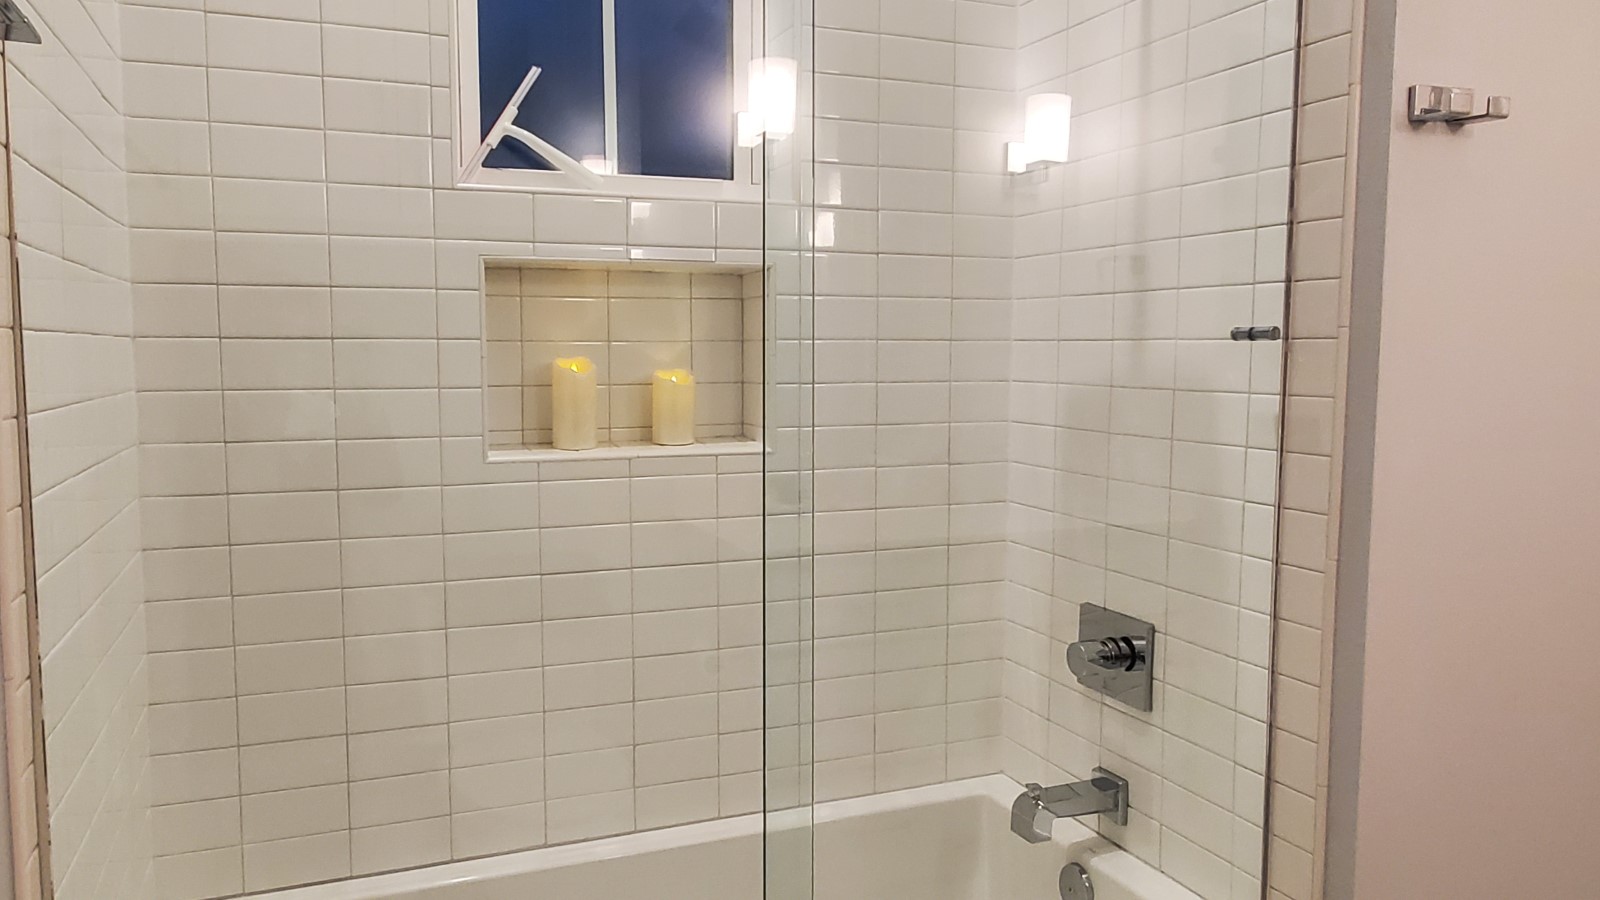 Bathroom 4:  tub/shower combination